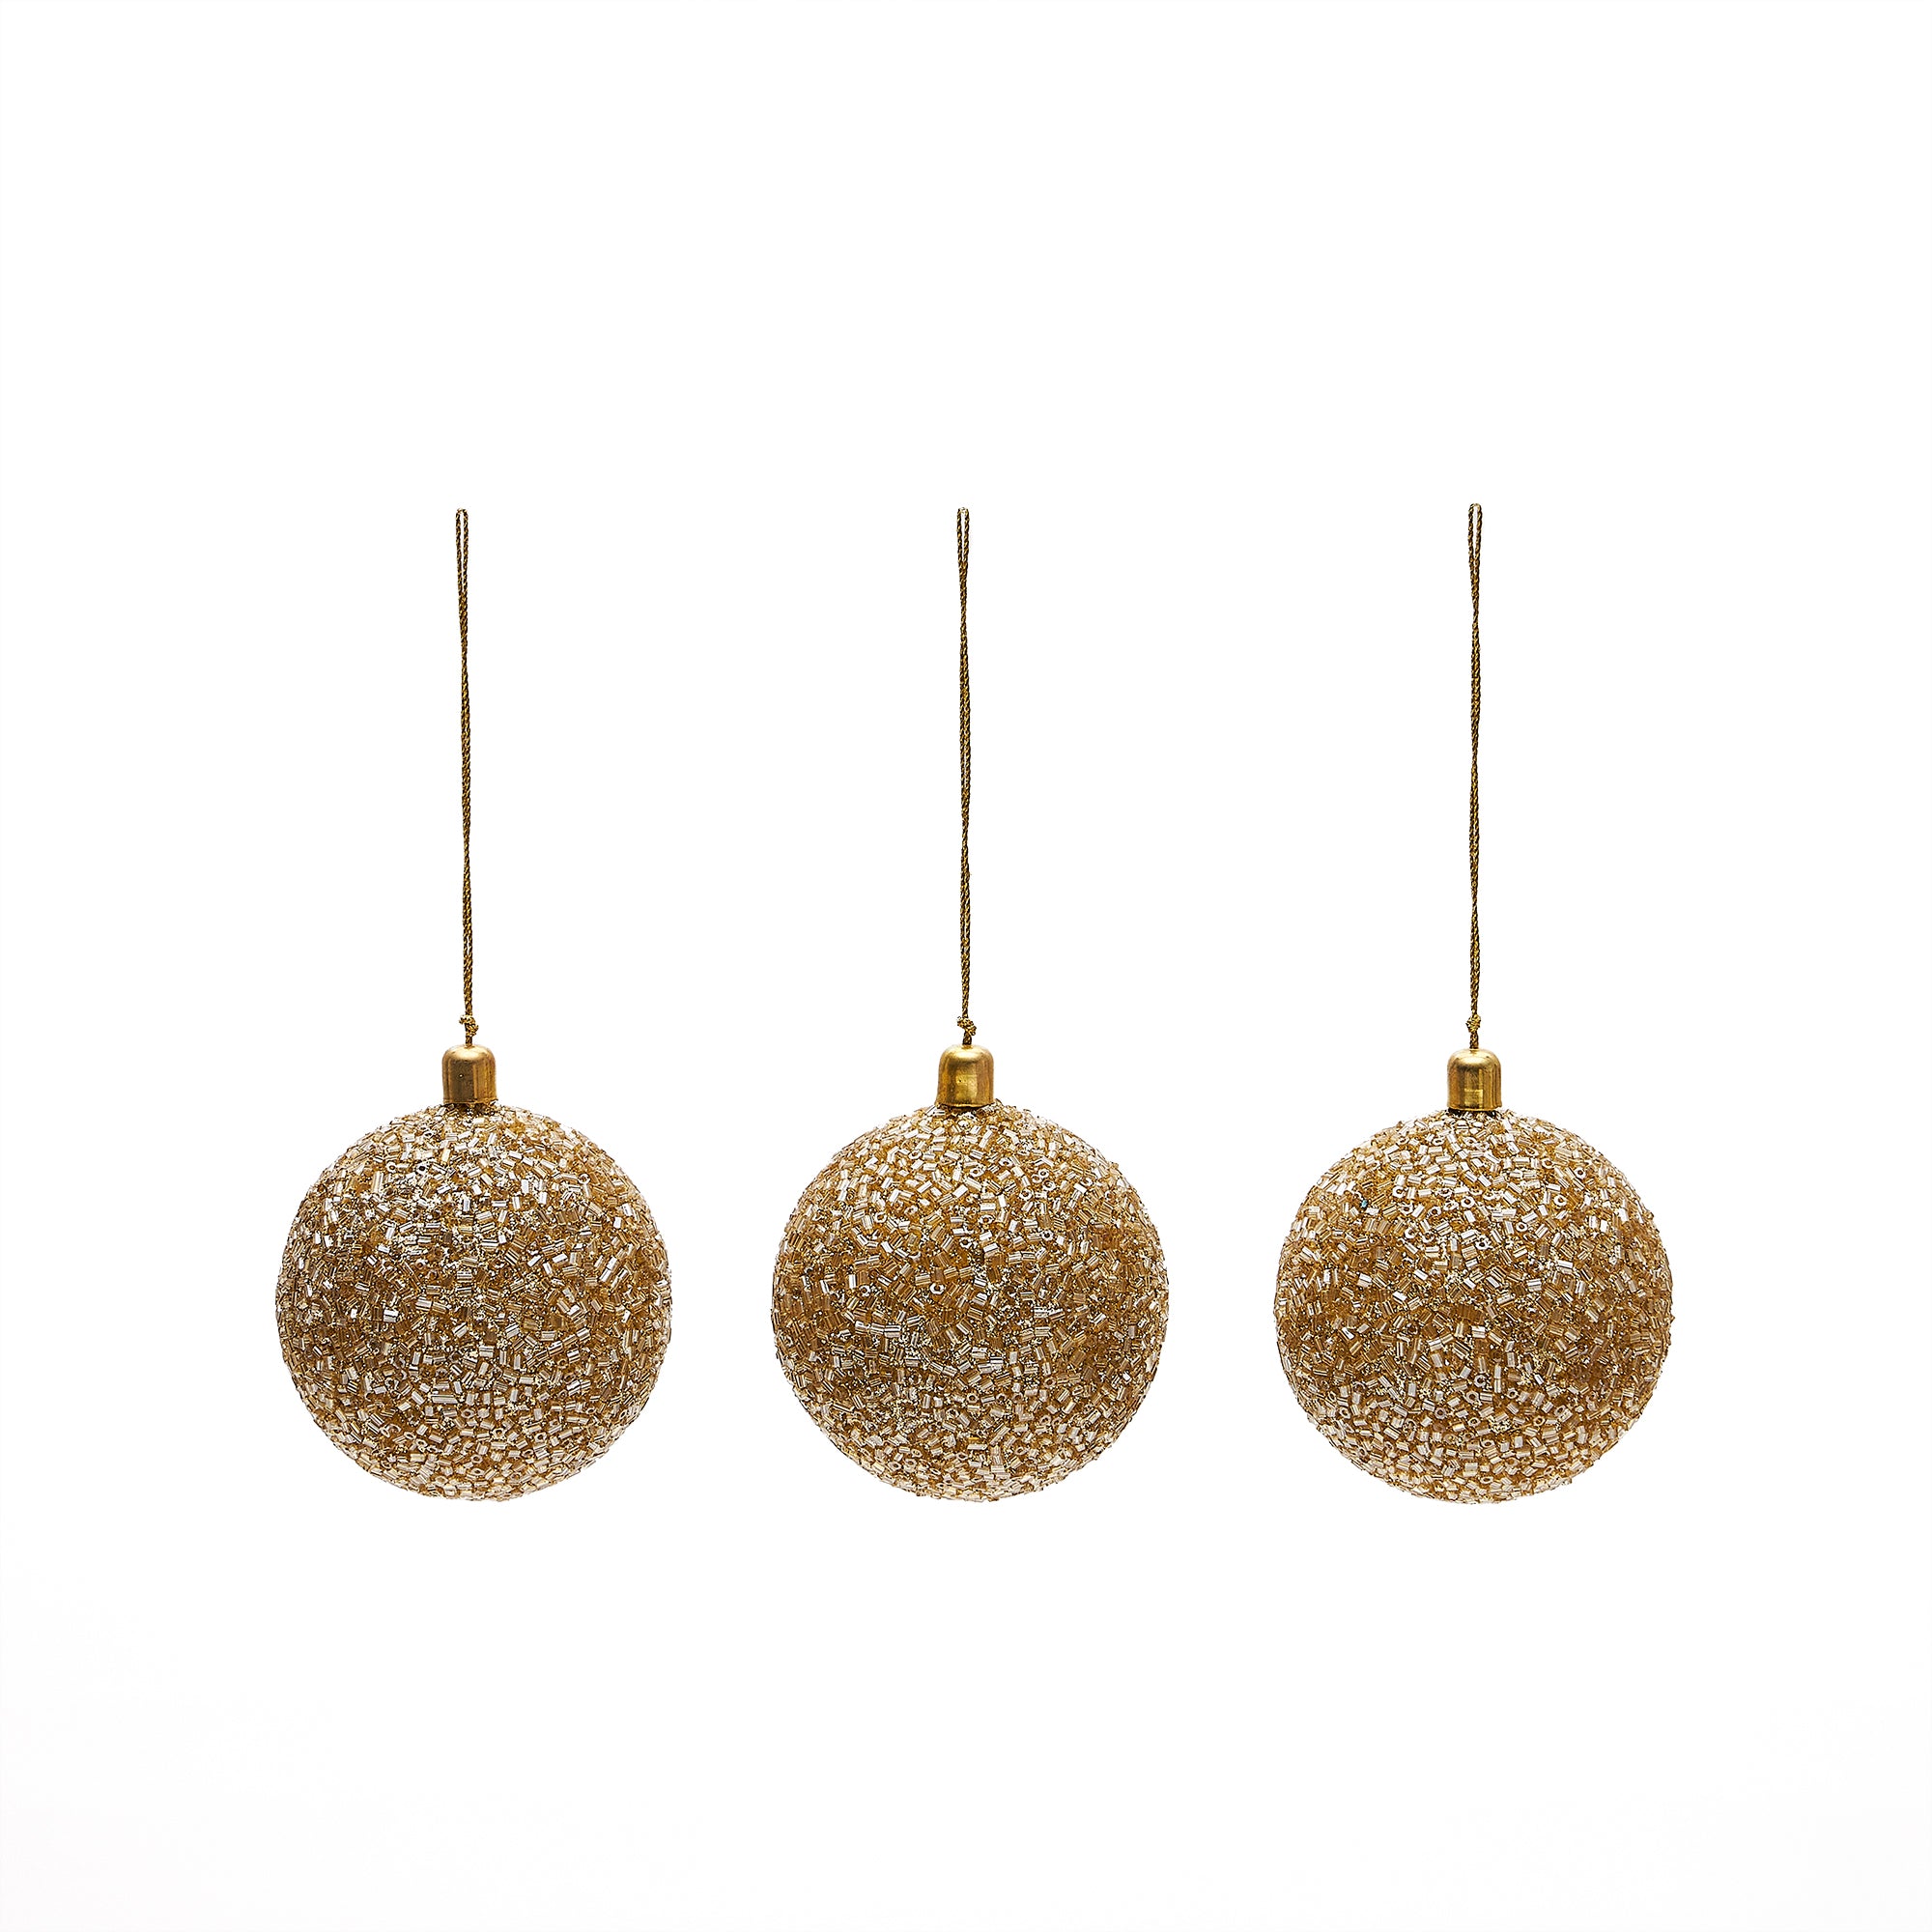 Briam set of 3 large gold decorative pendant balls